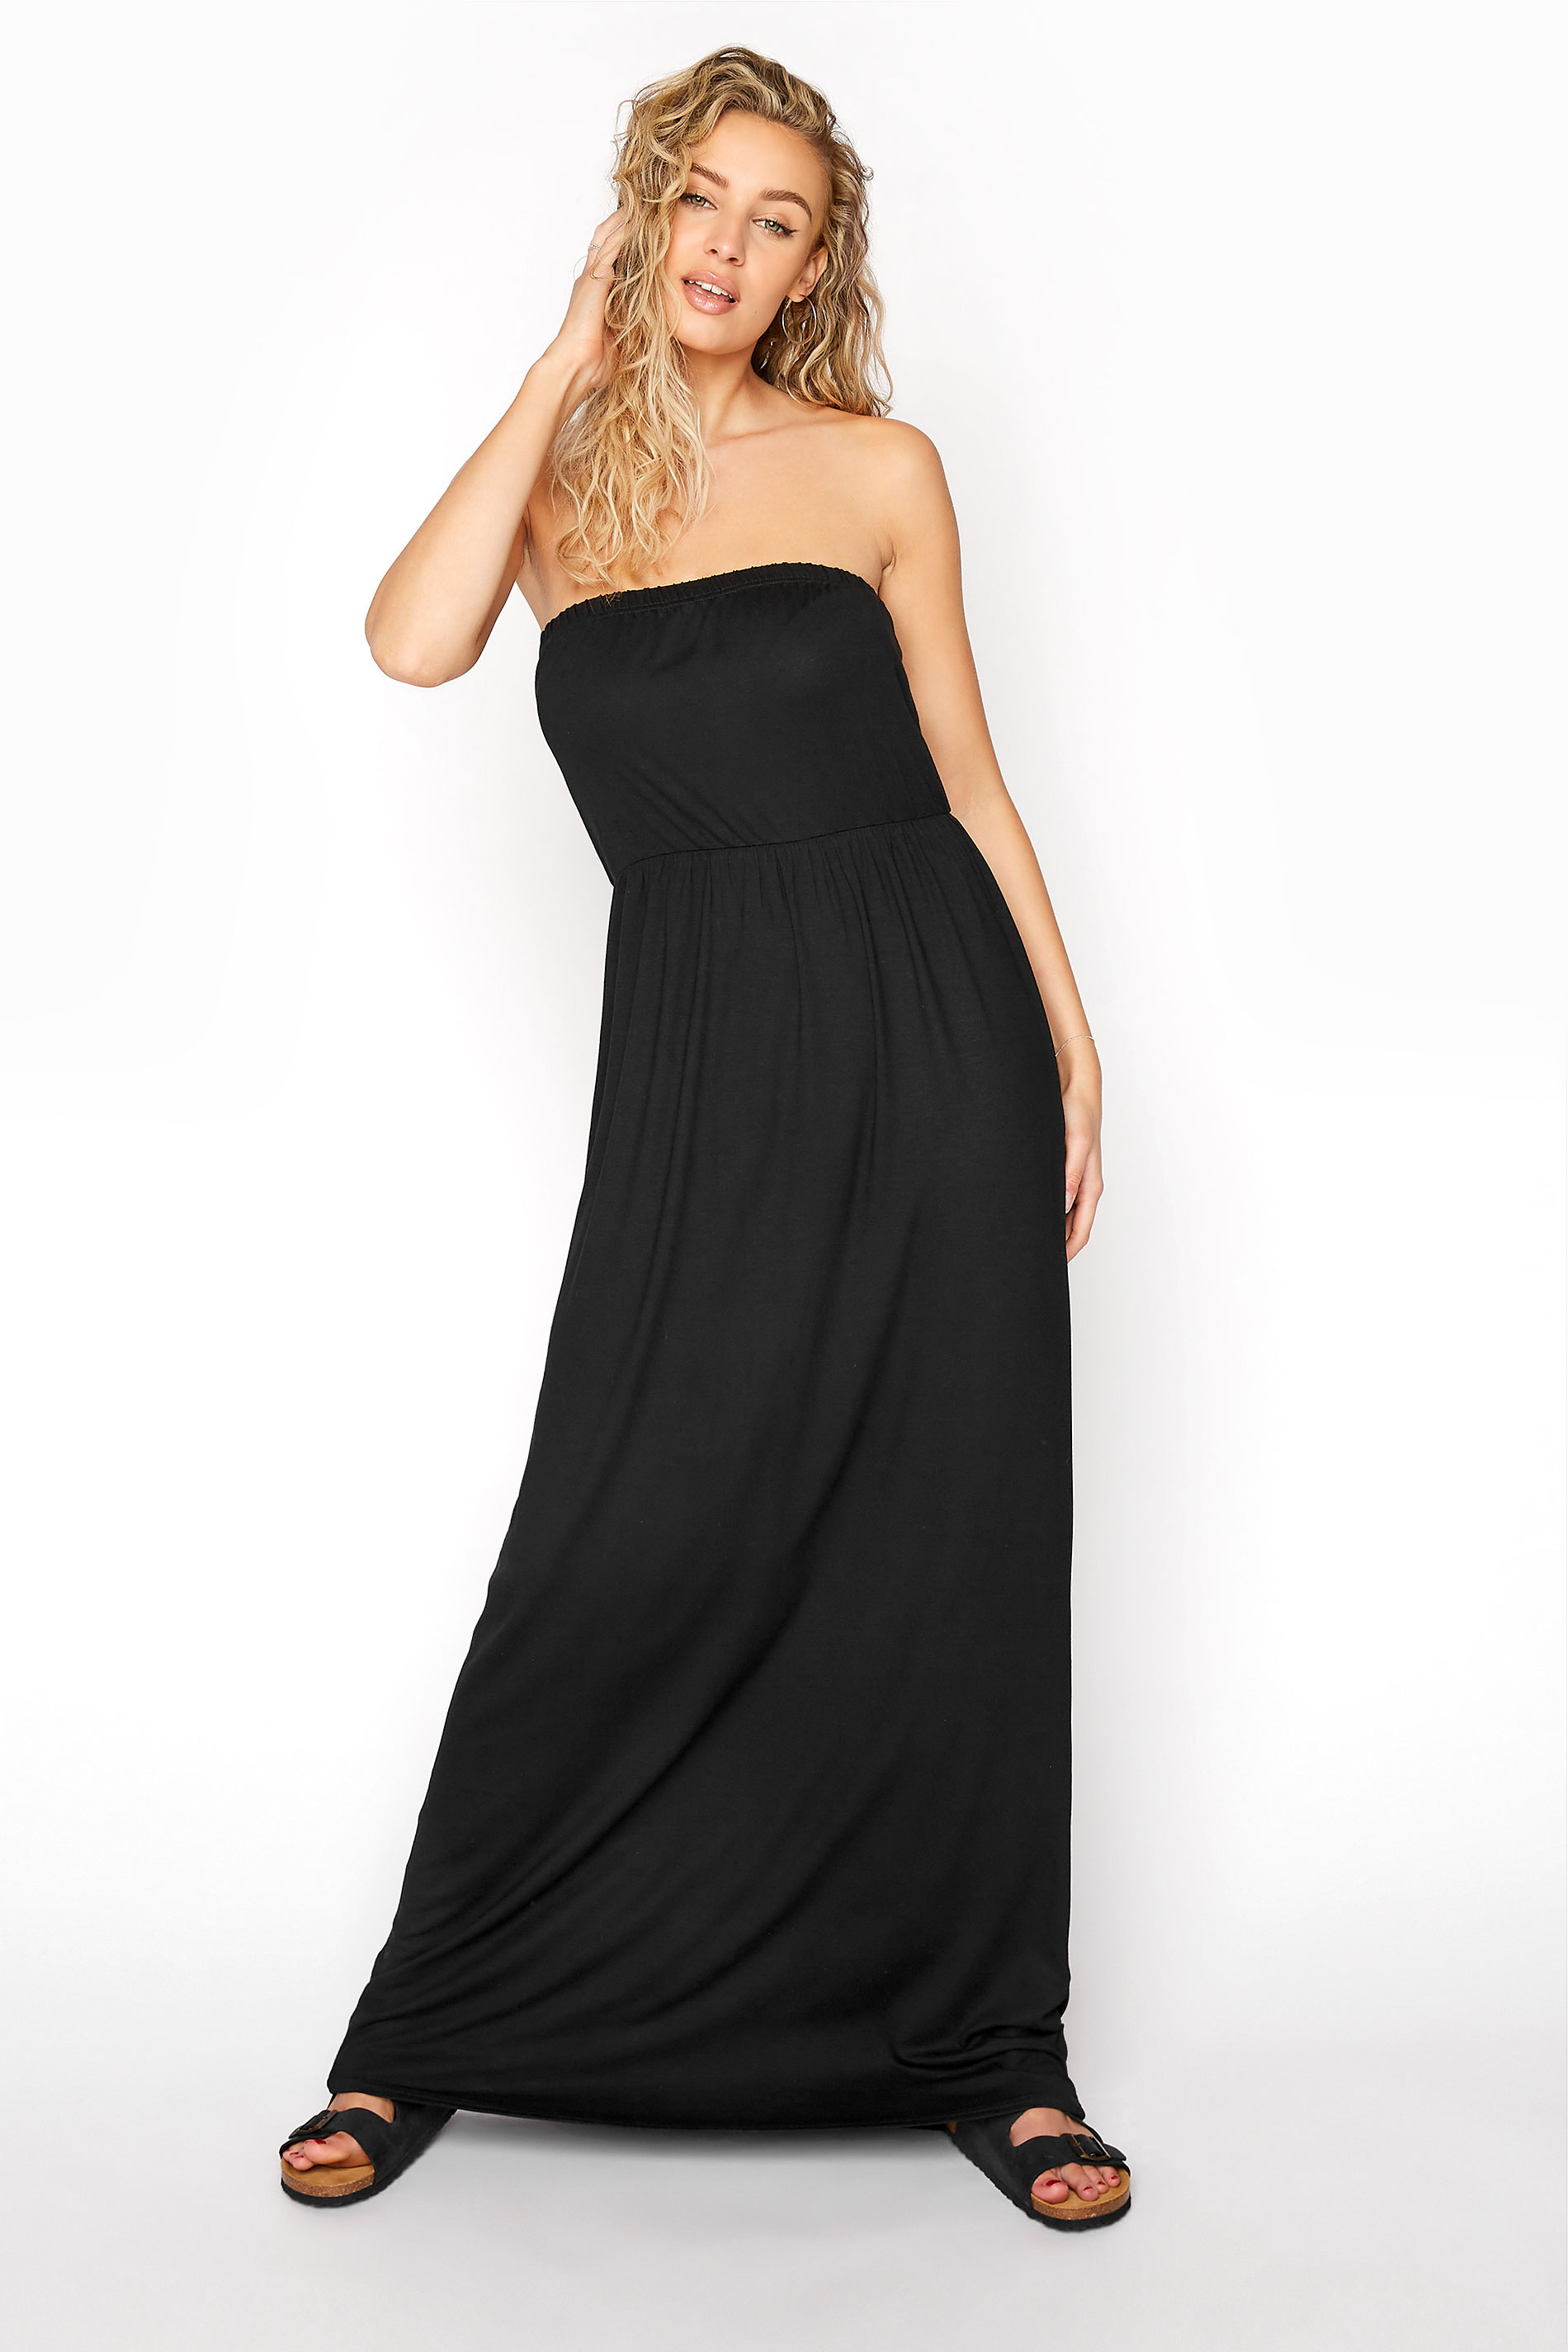 LTS Black Strapless Maxi Dress | Long Tall Sally